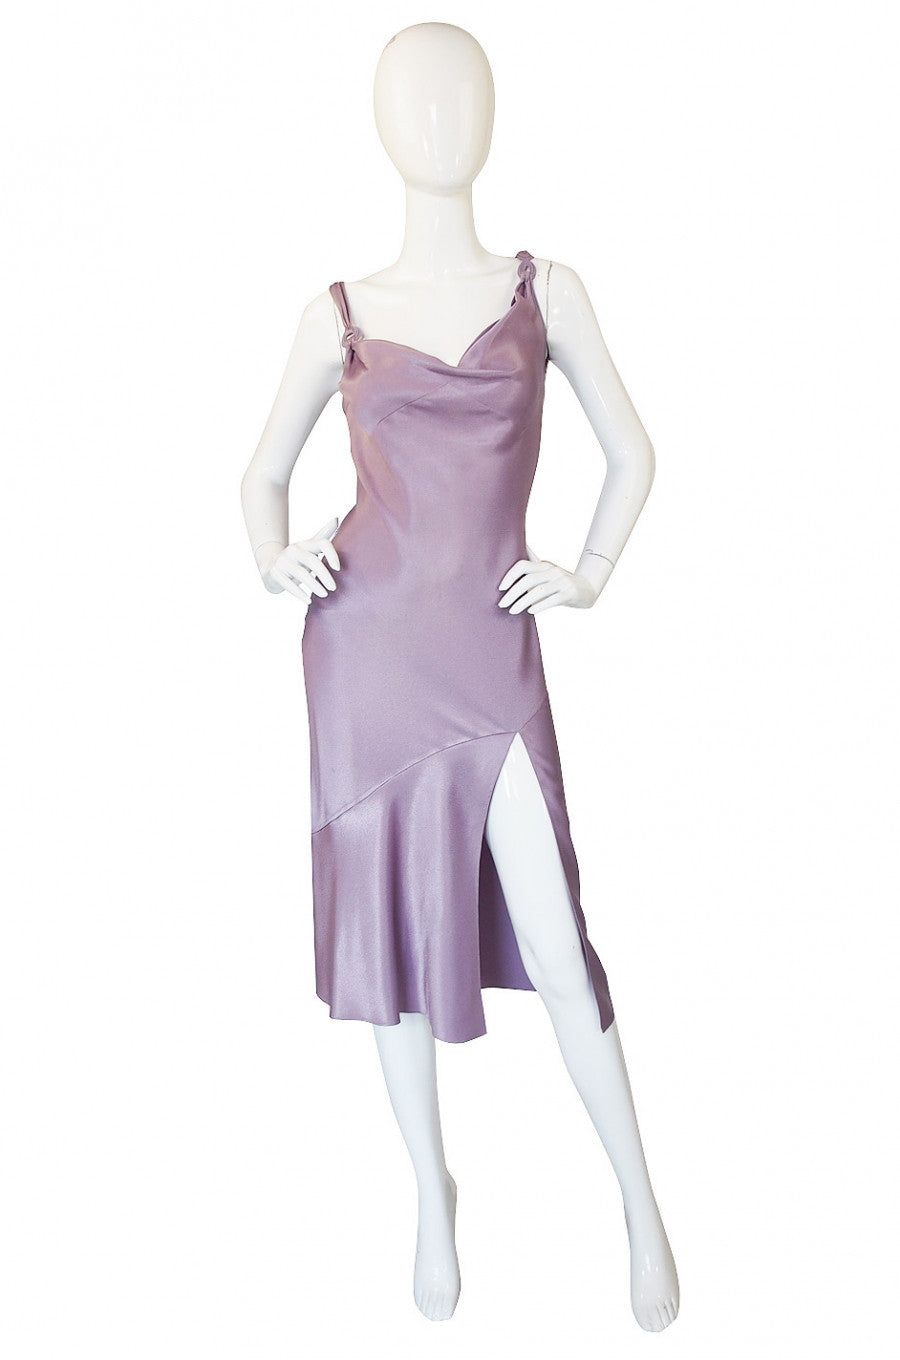 1996-97 – John Galliano, Suede dress